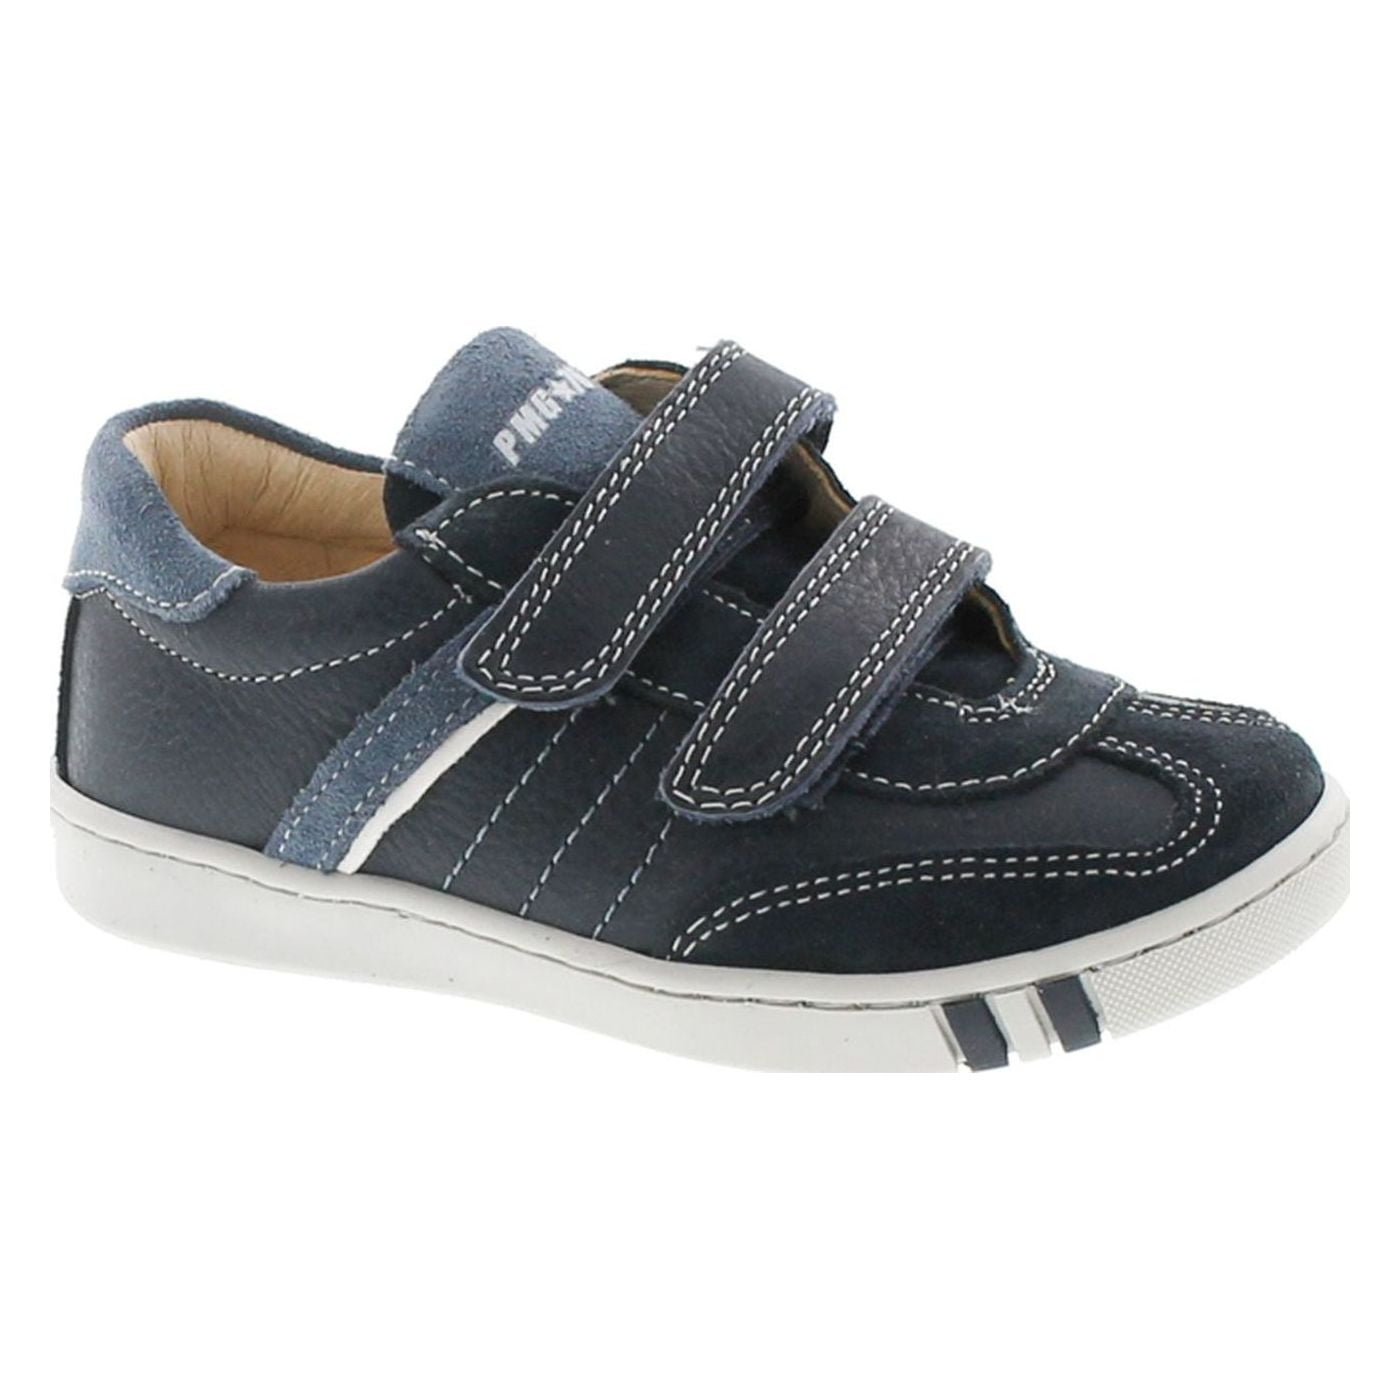 Primigi - Primigi Boys 14246 Leather European Casual Shoes - Walmart ...